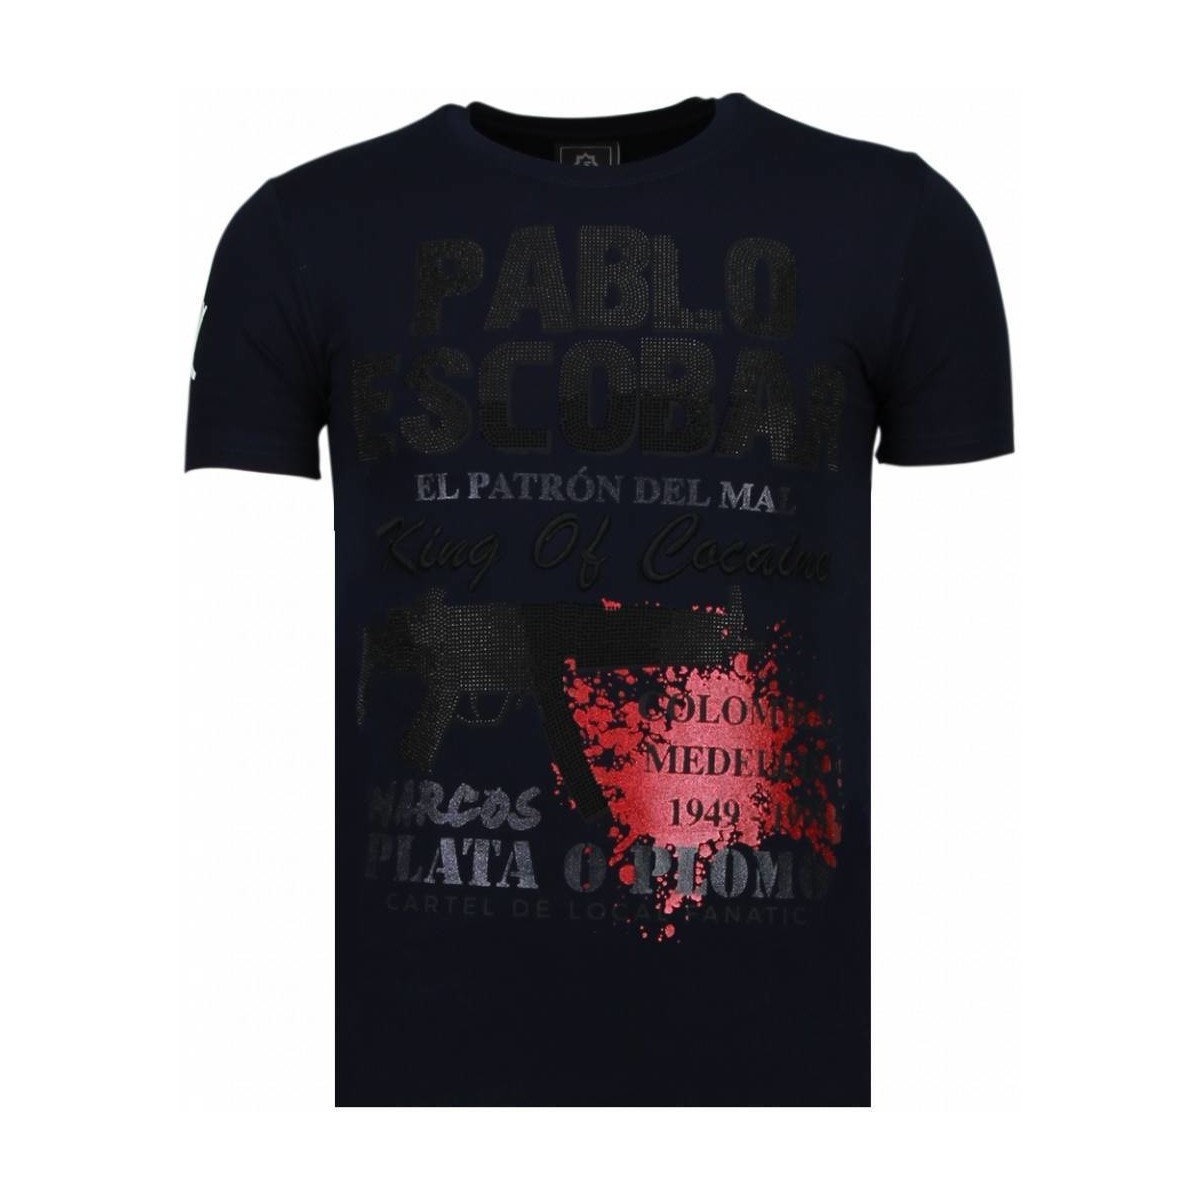 Textiel Heren T-shirts korte mouwen Local Fanatic Pablo Escobar Narcos Rhinestone Blauw